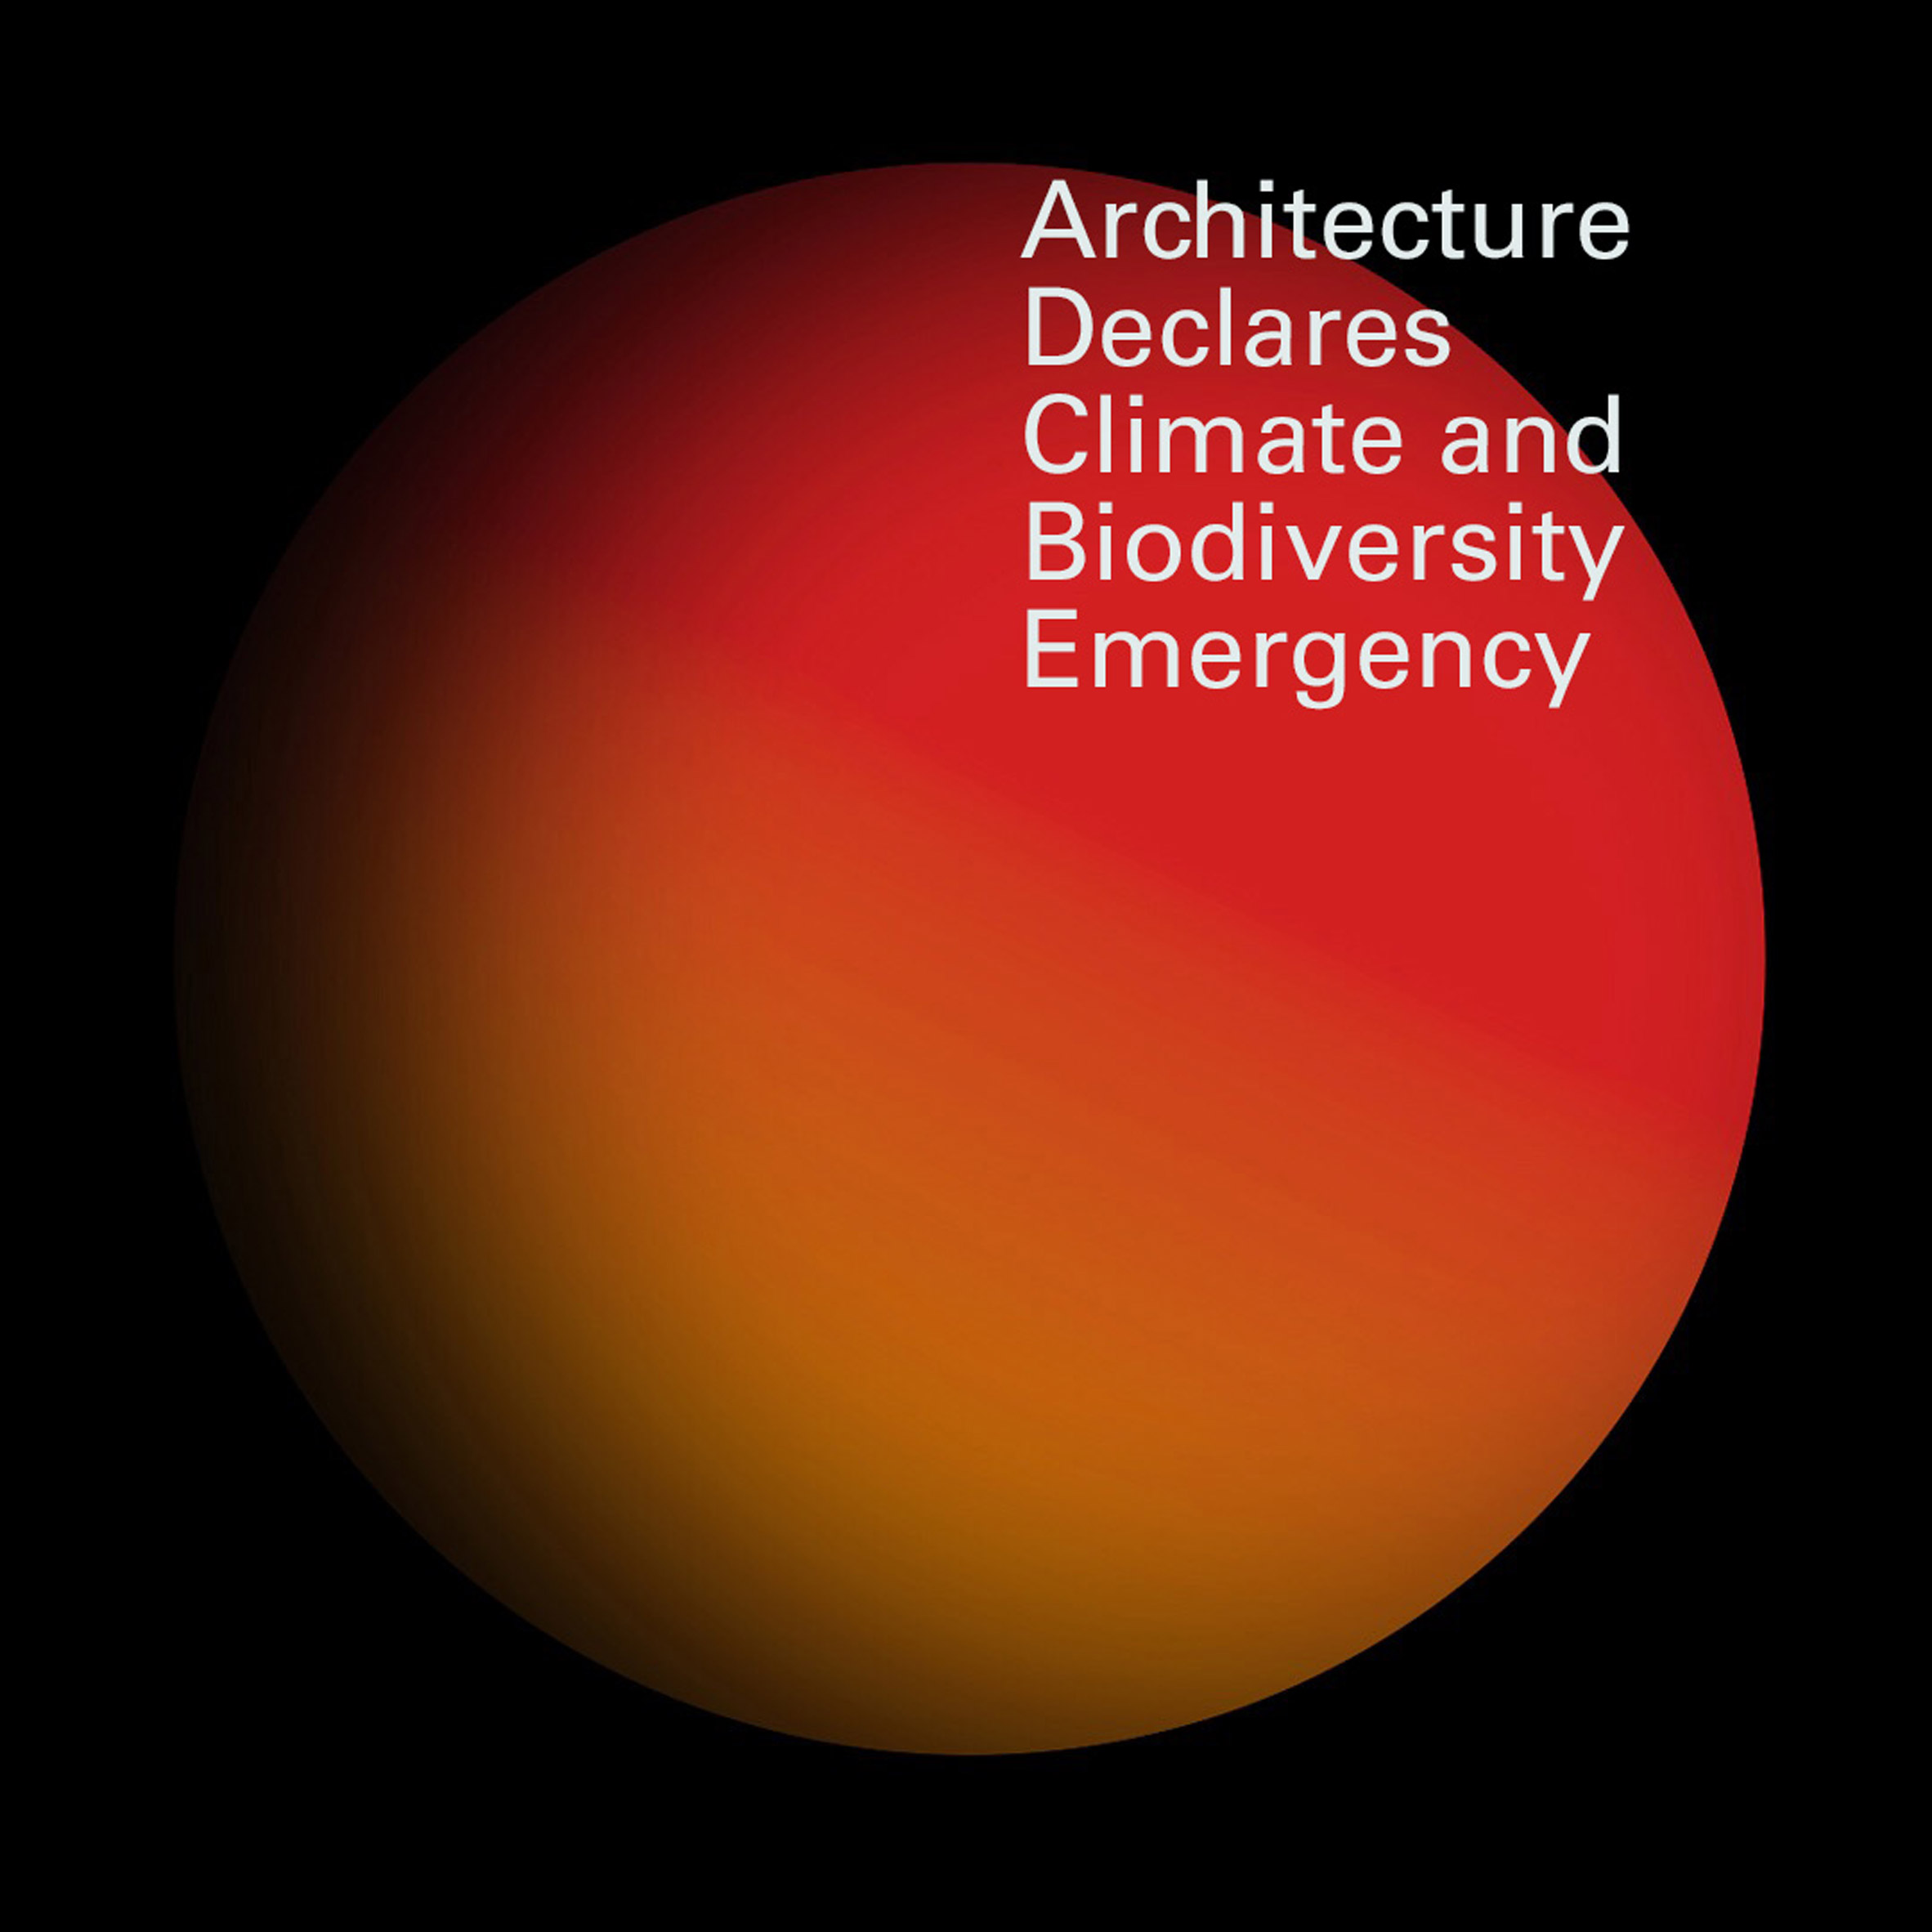 Architects Declare logo